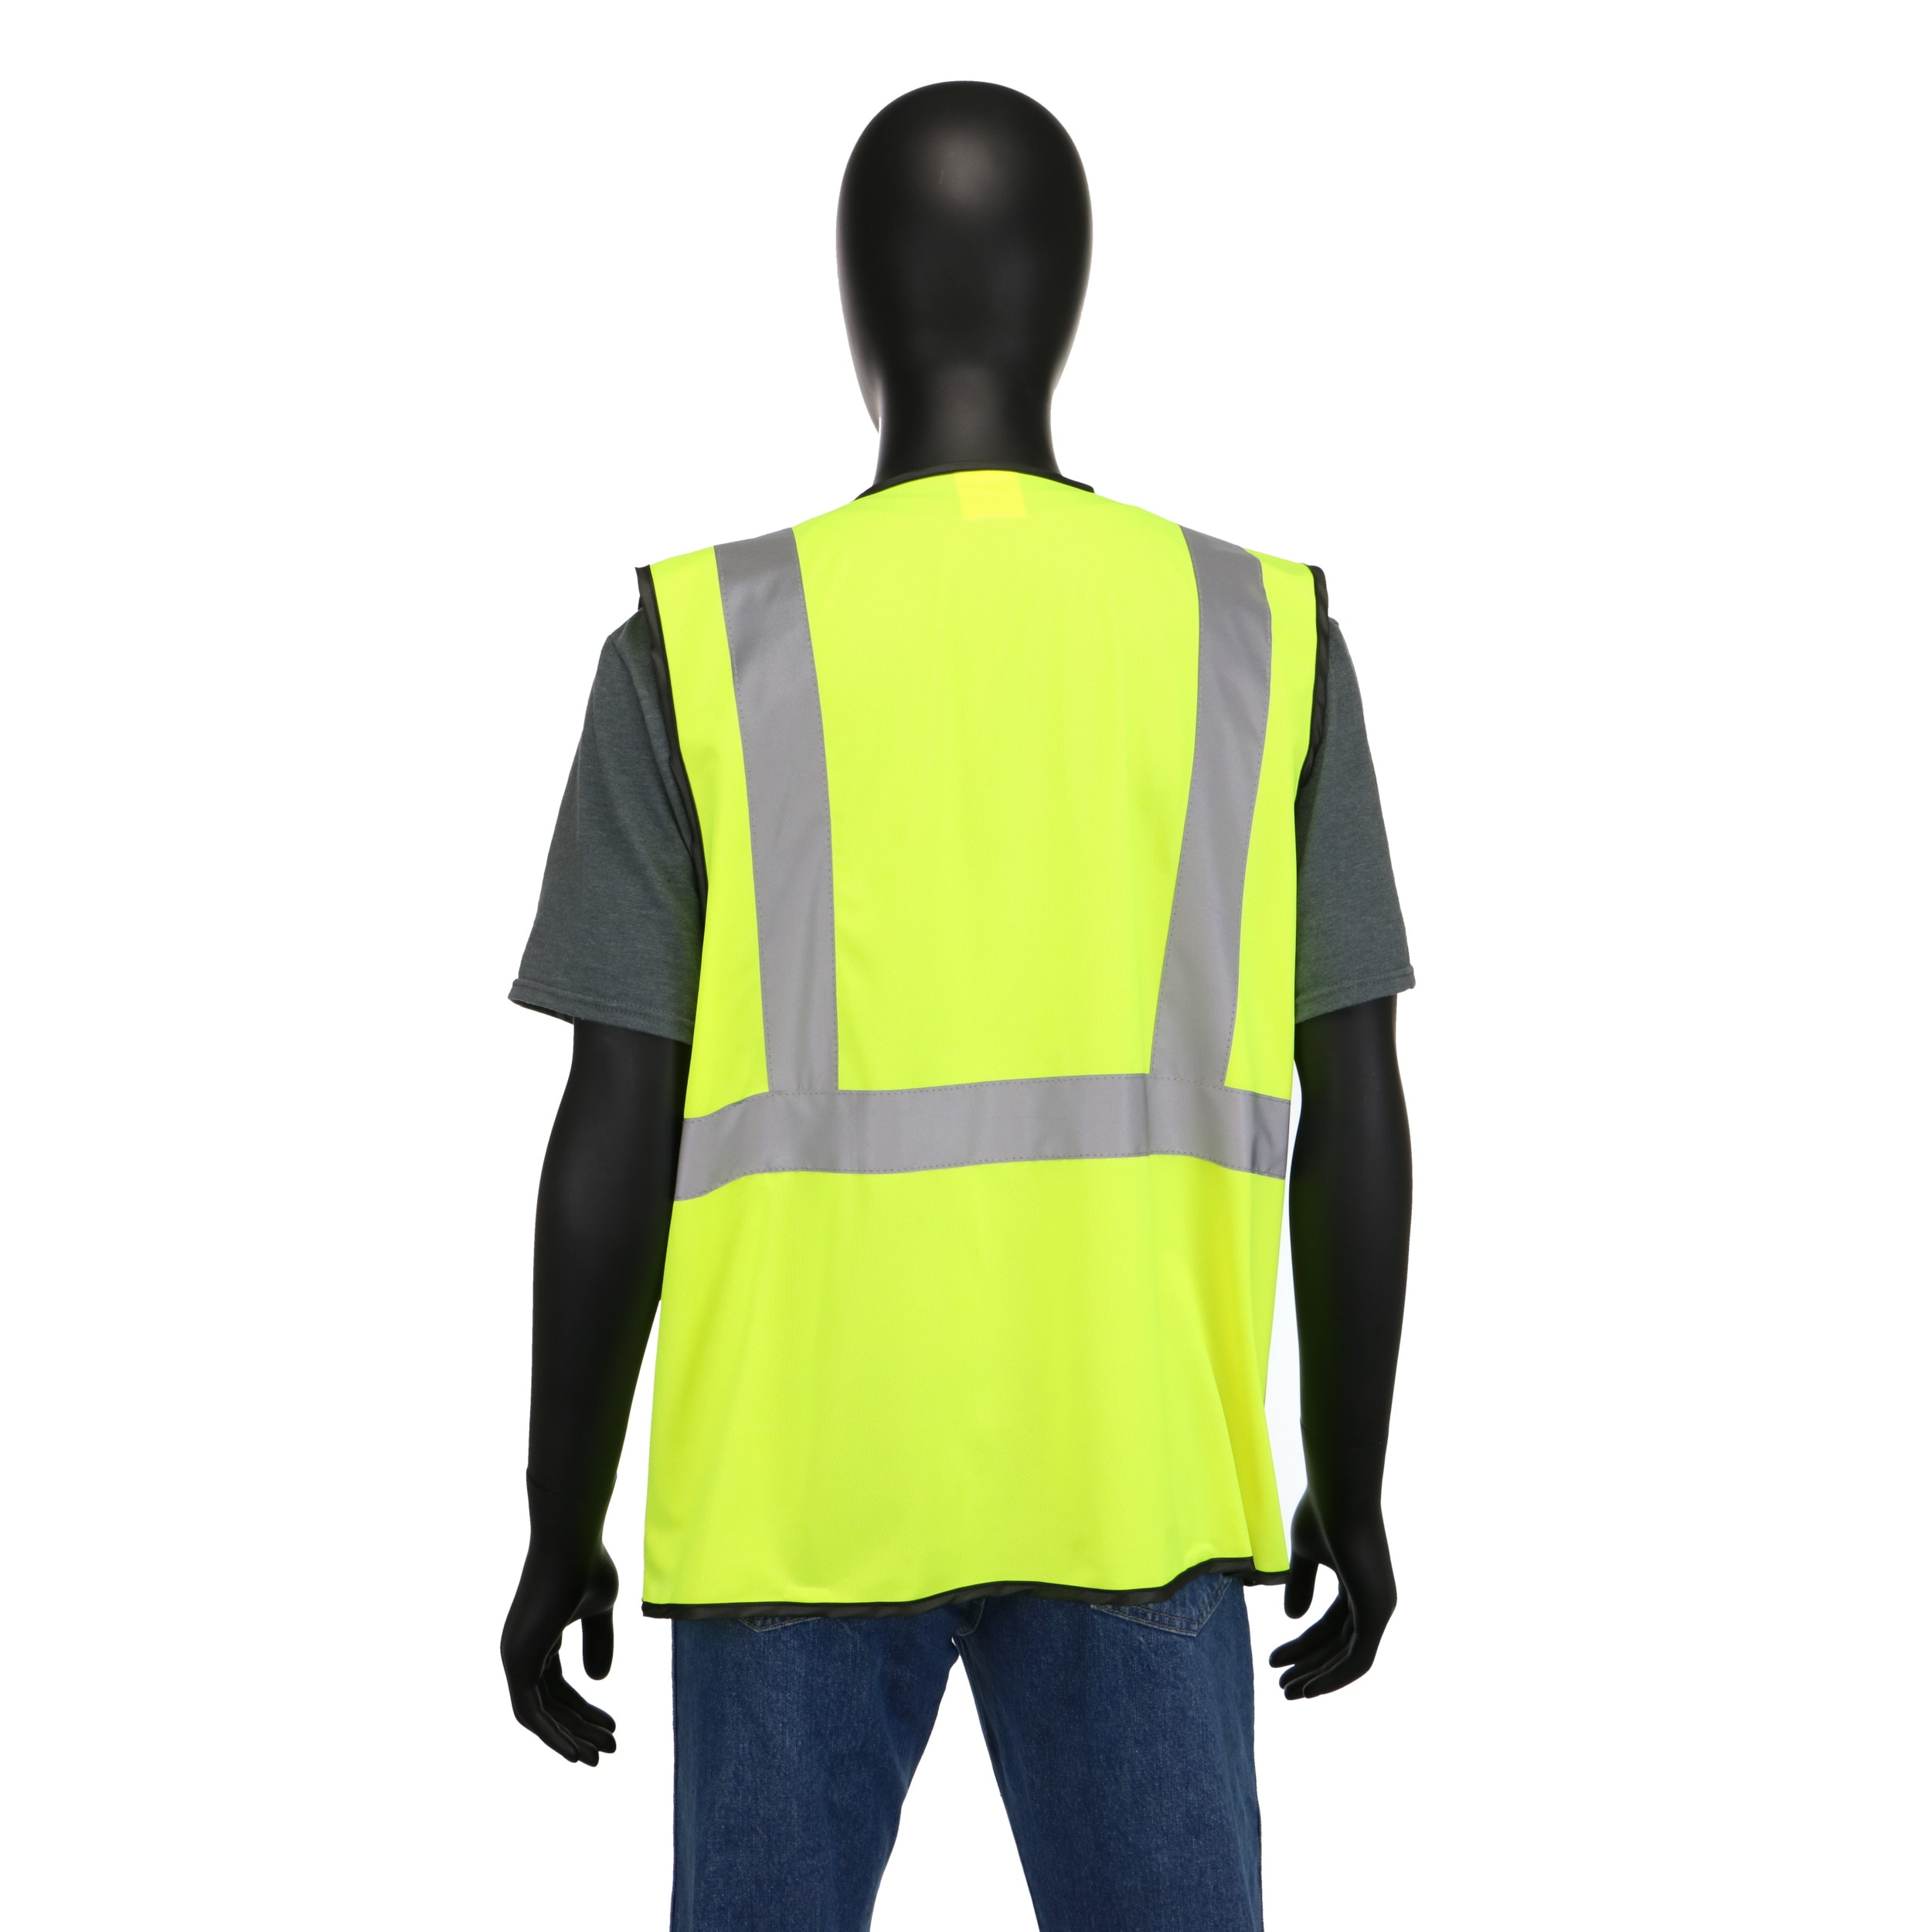 D/N Zipped Long Sleeve Yellow Vest – Safe-T-Tec